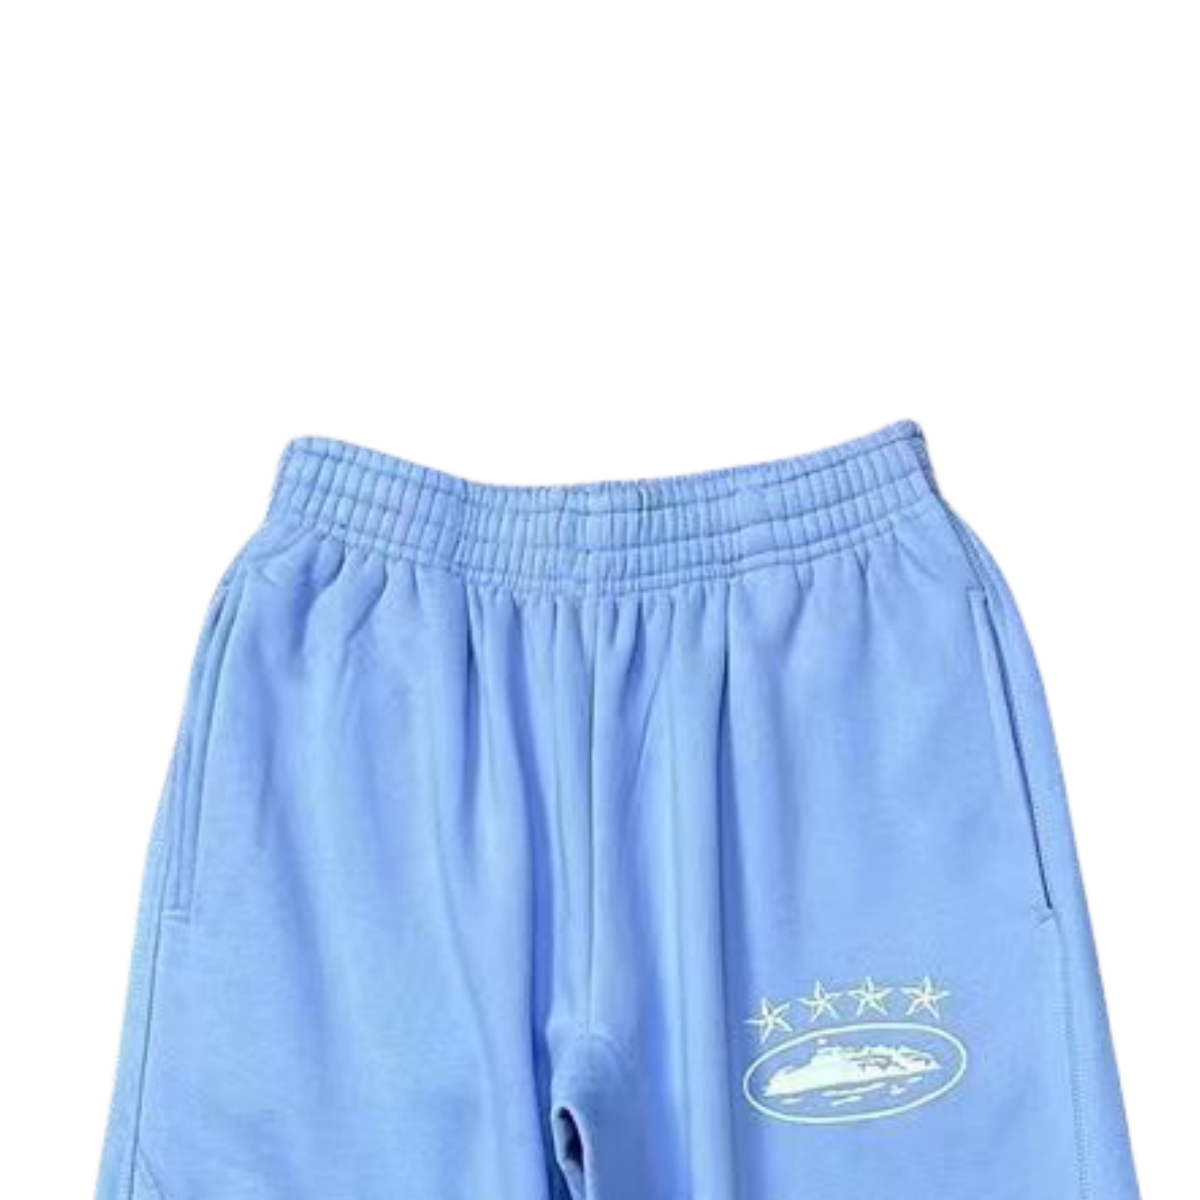 Pantalon de jogging Corteiz 4 Starz Alcatraz - Bleu bébé